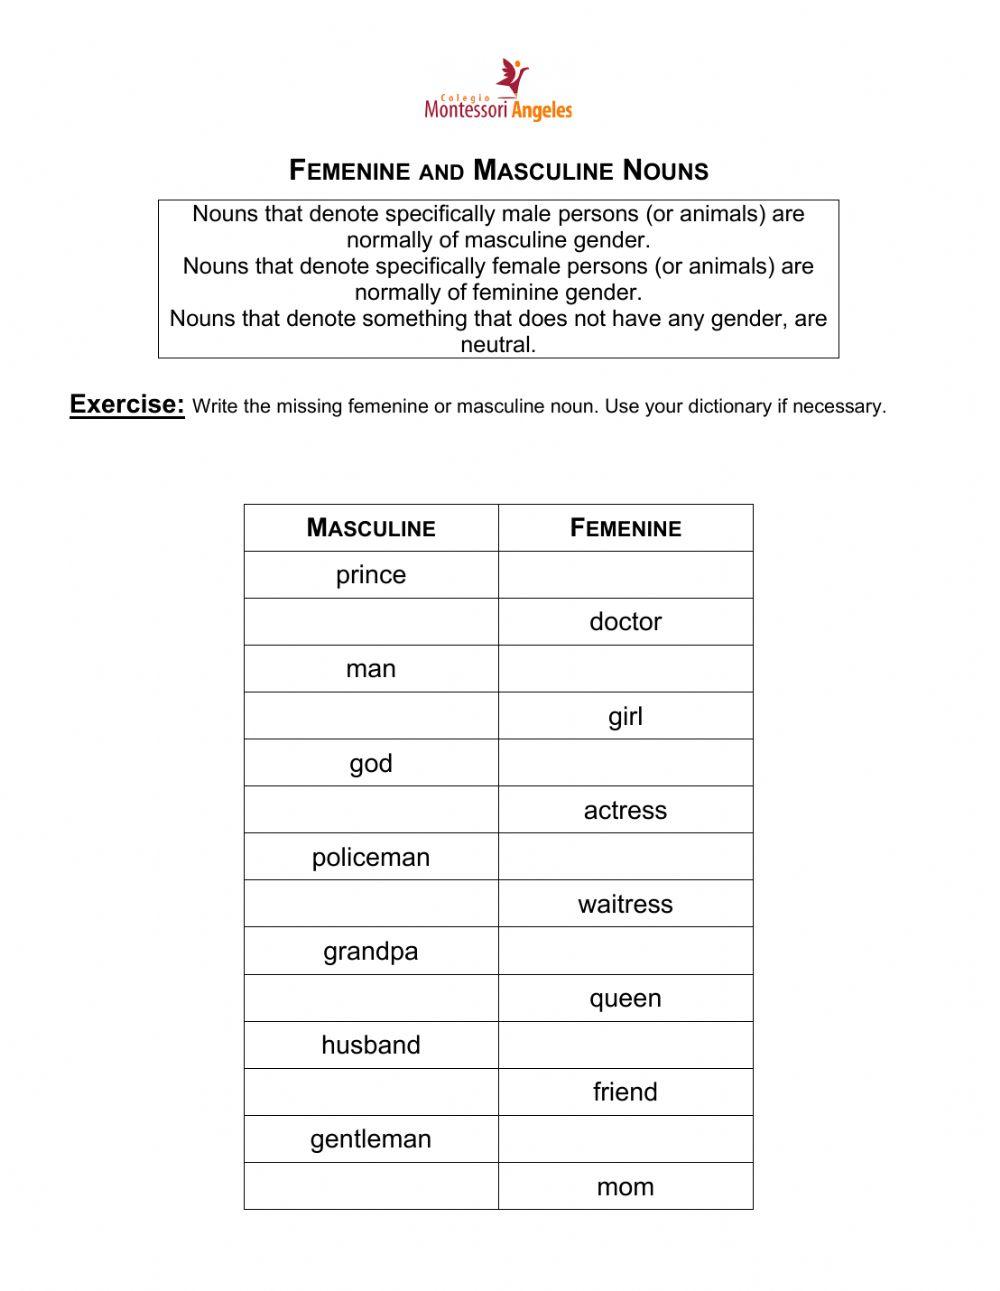 Masculine and femenine nouns